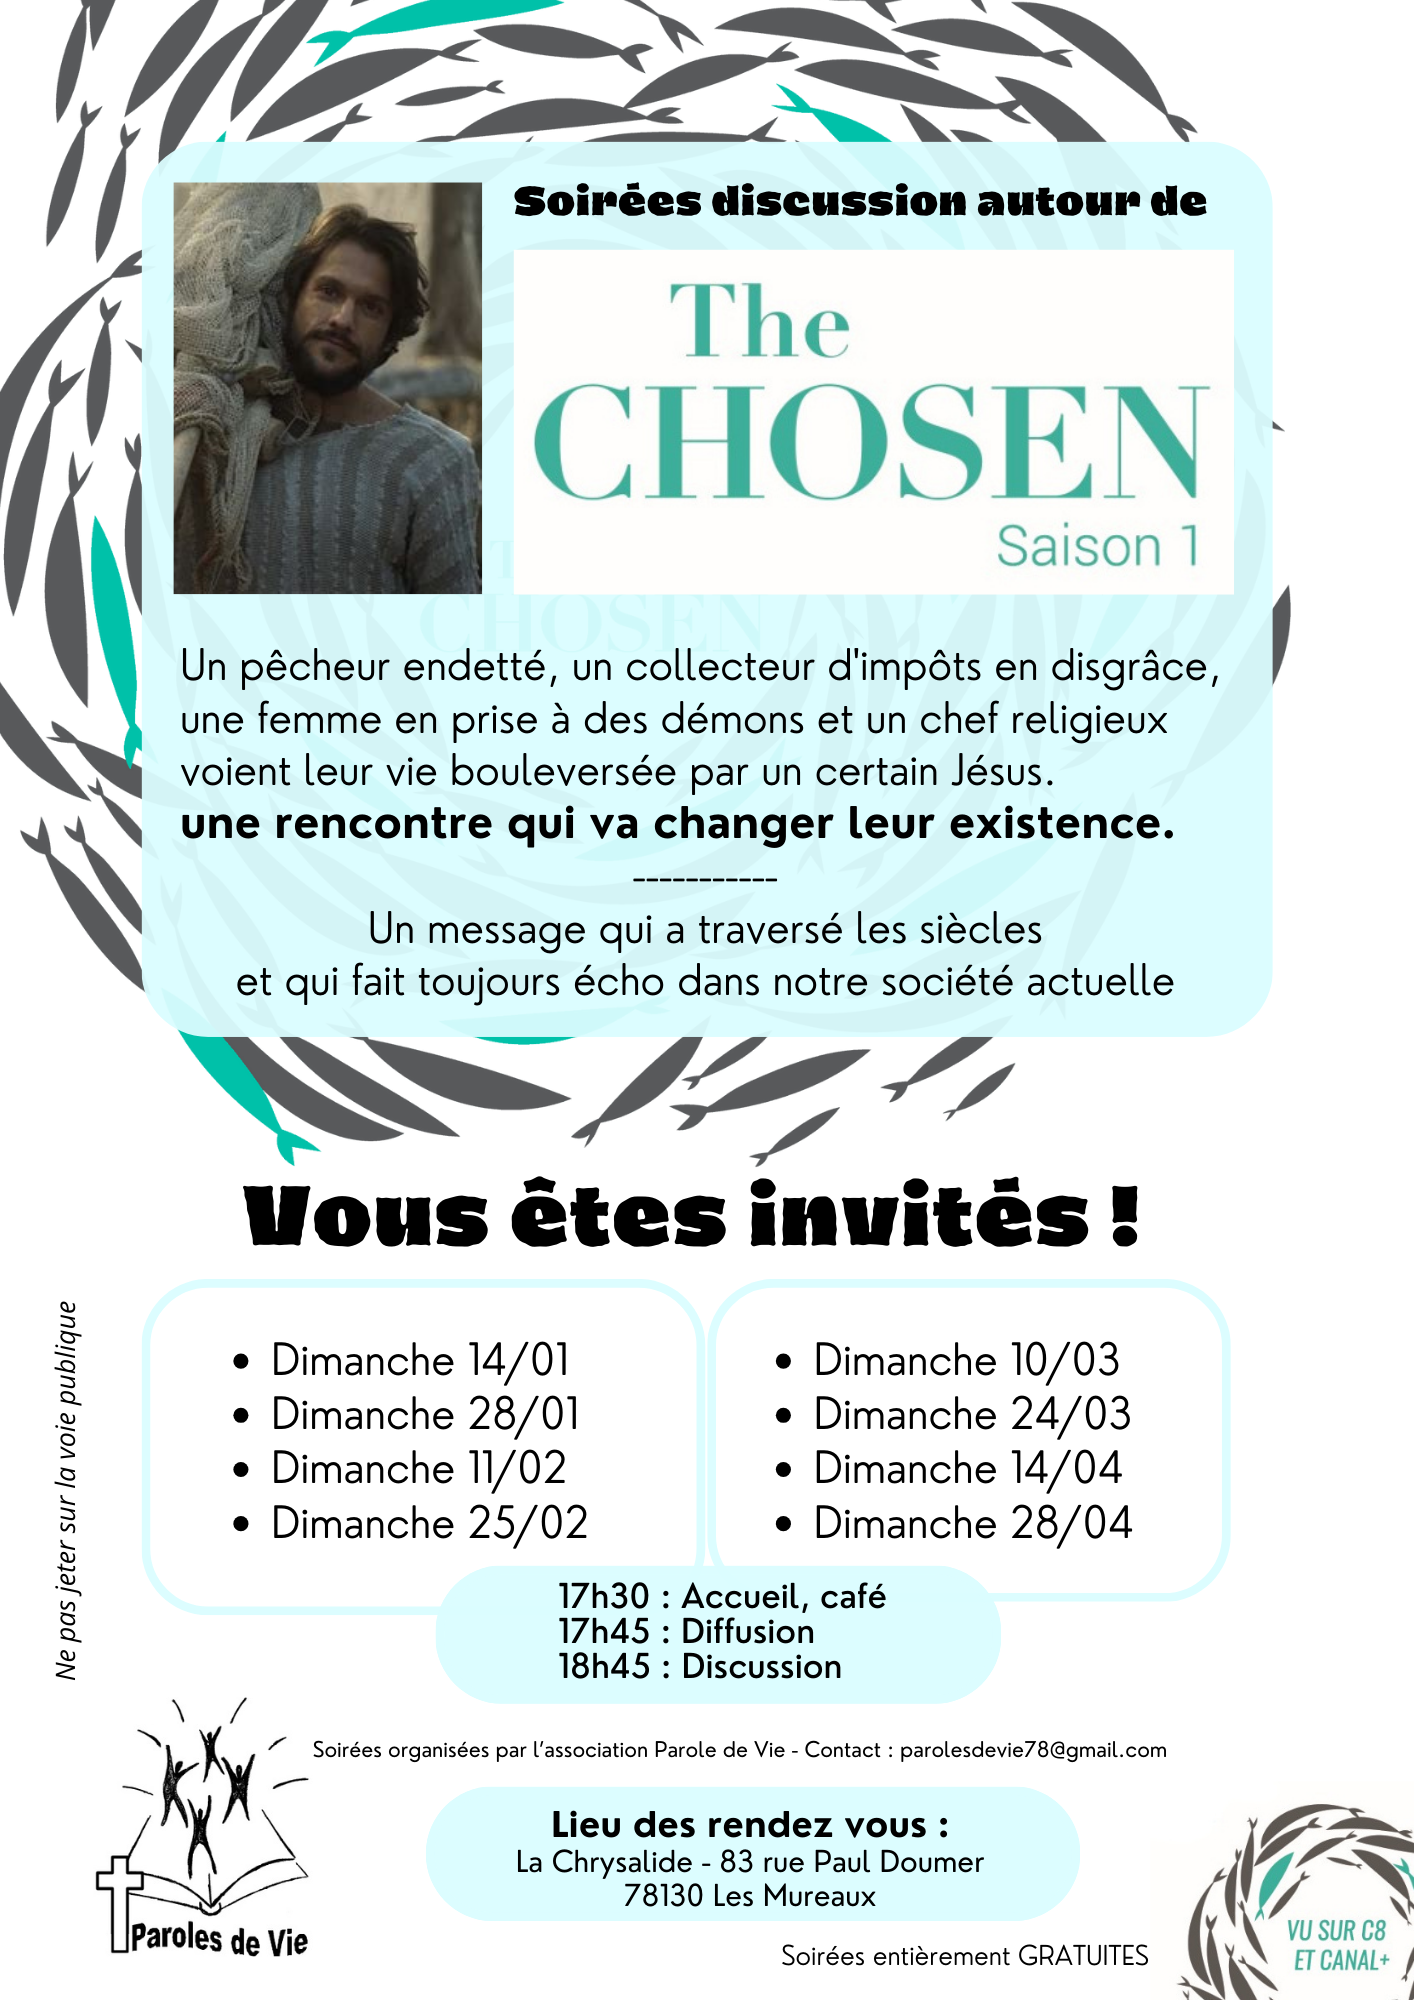 The chosen saison 1